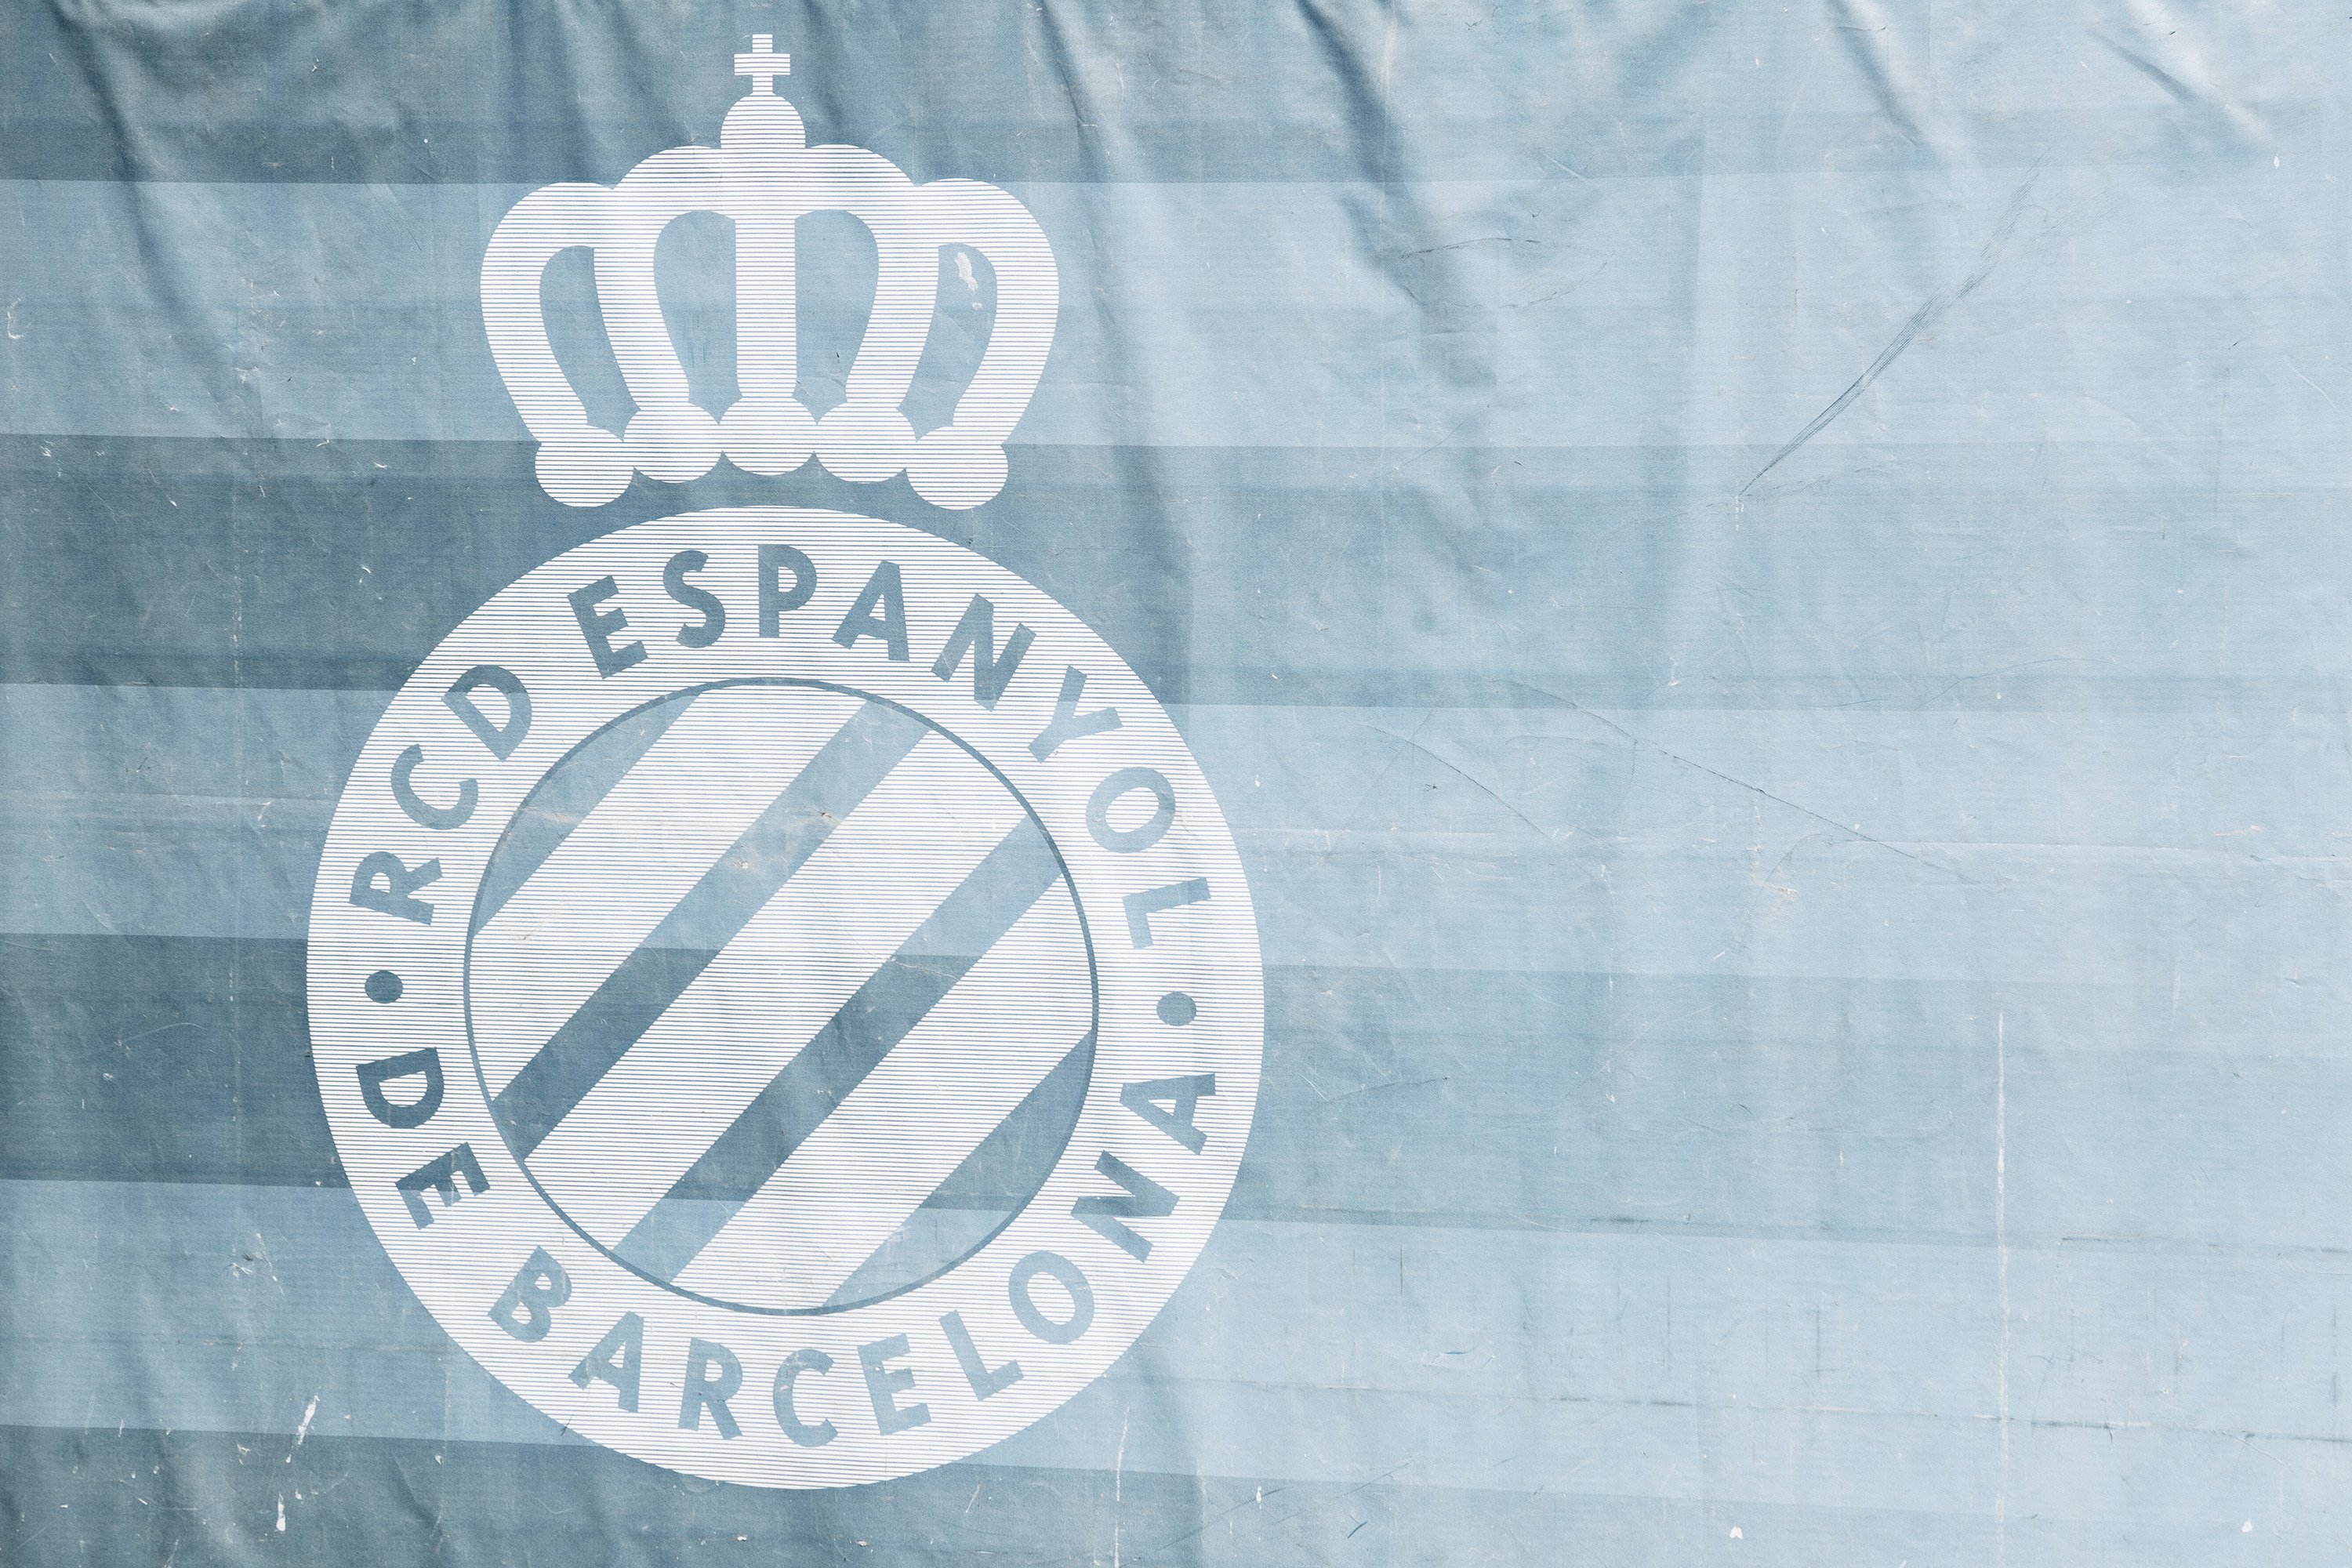 Condemna de l'Espanyol: "La violència i el racisme no tenen cabuda en el futbol"